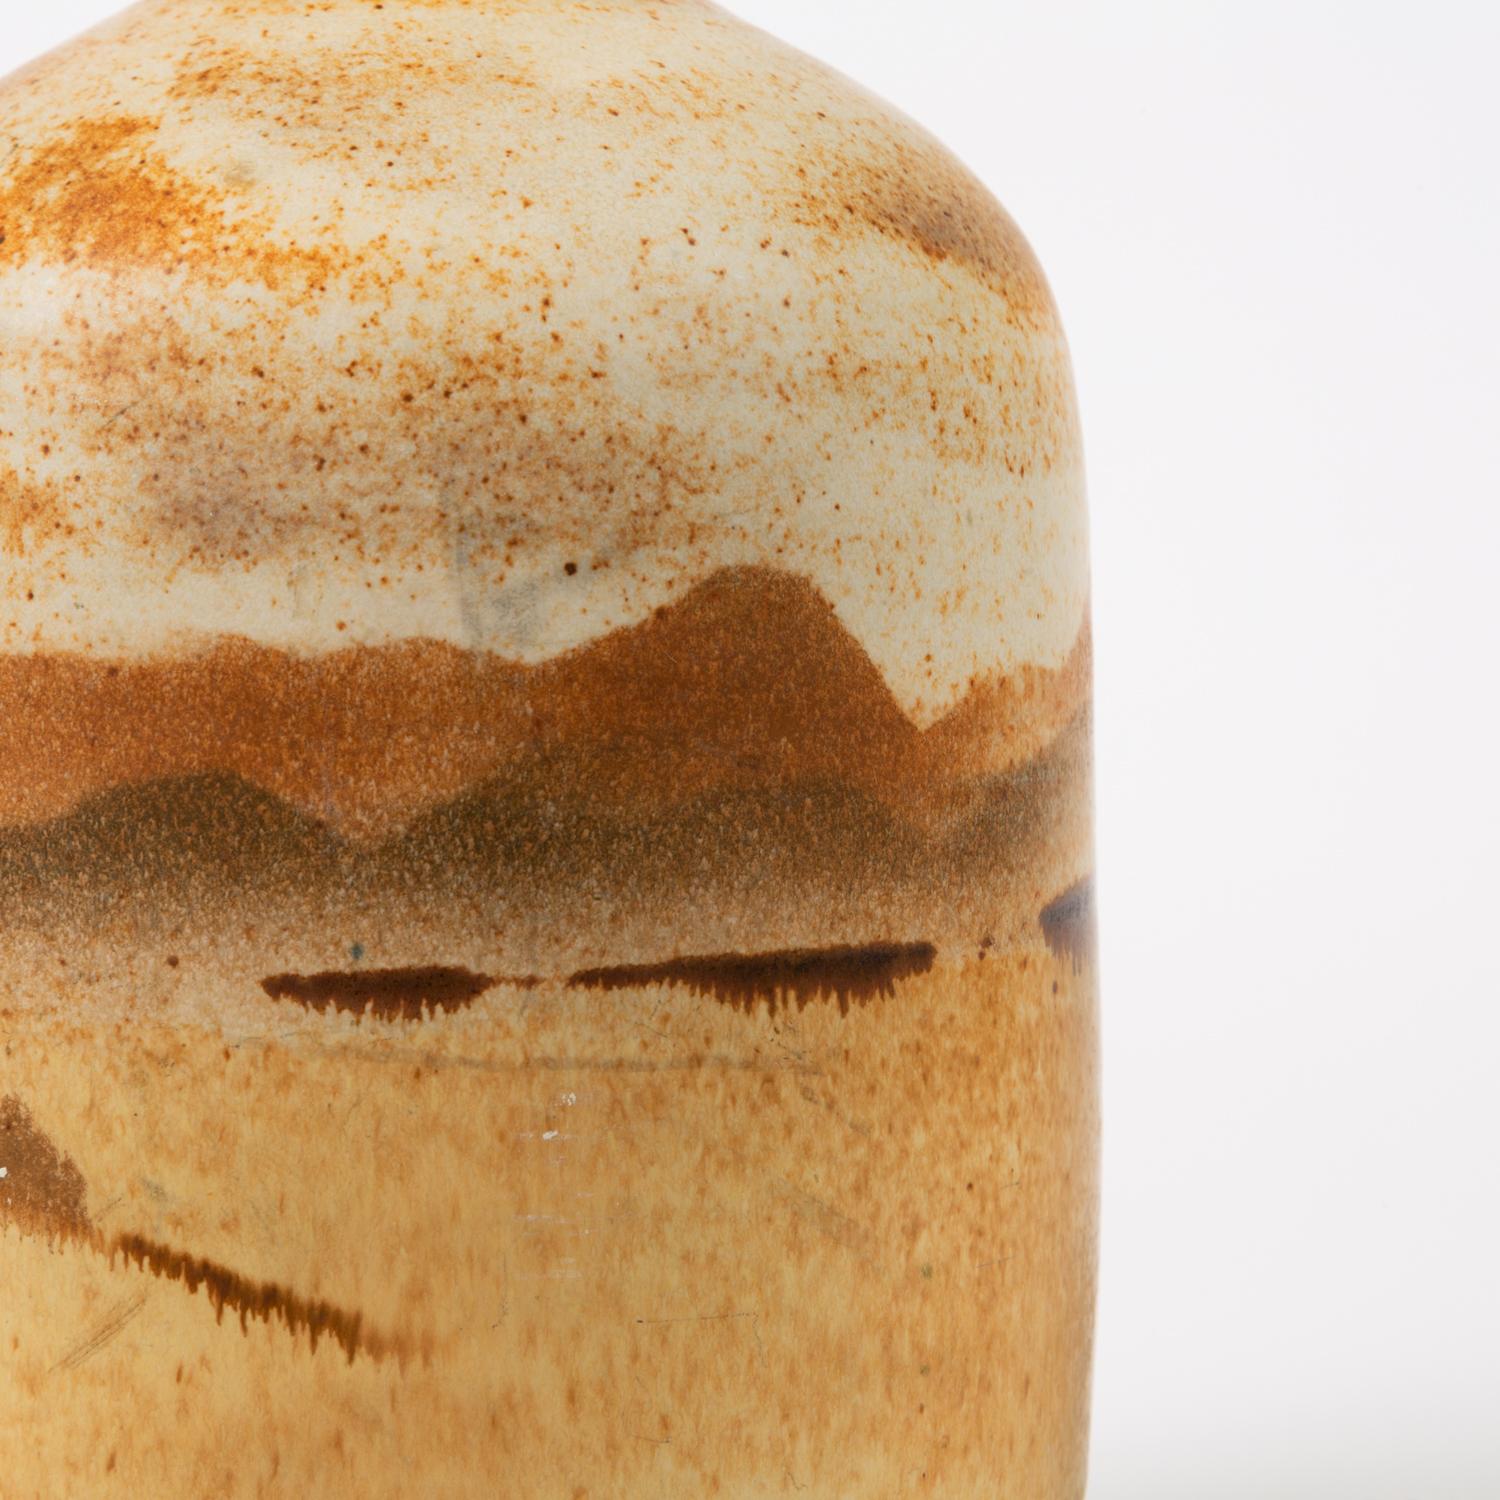 California Studio Pottery Bottle with Cork Stopper 'JB' 2